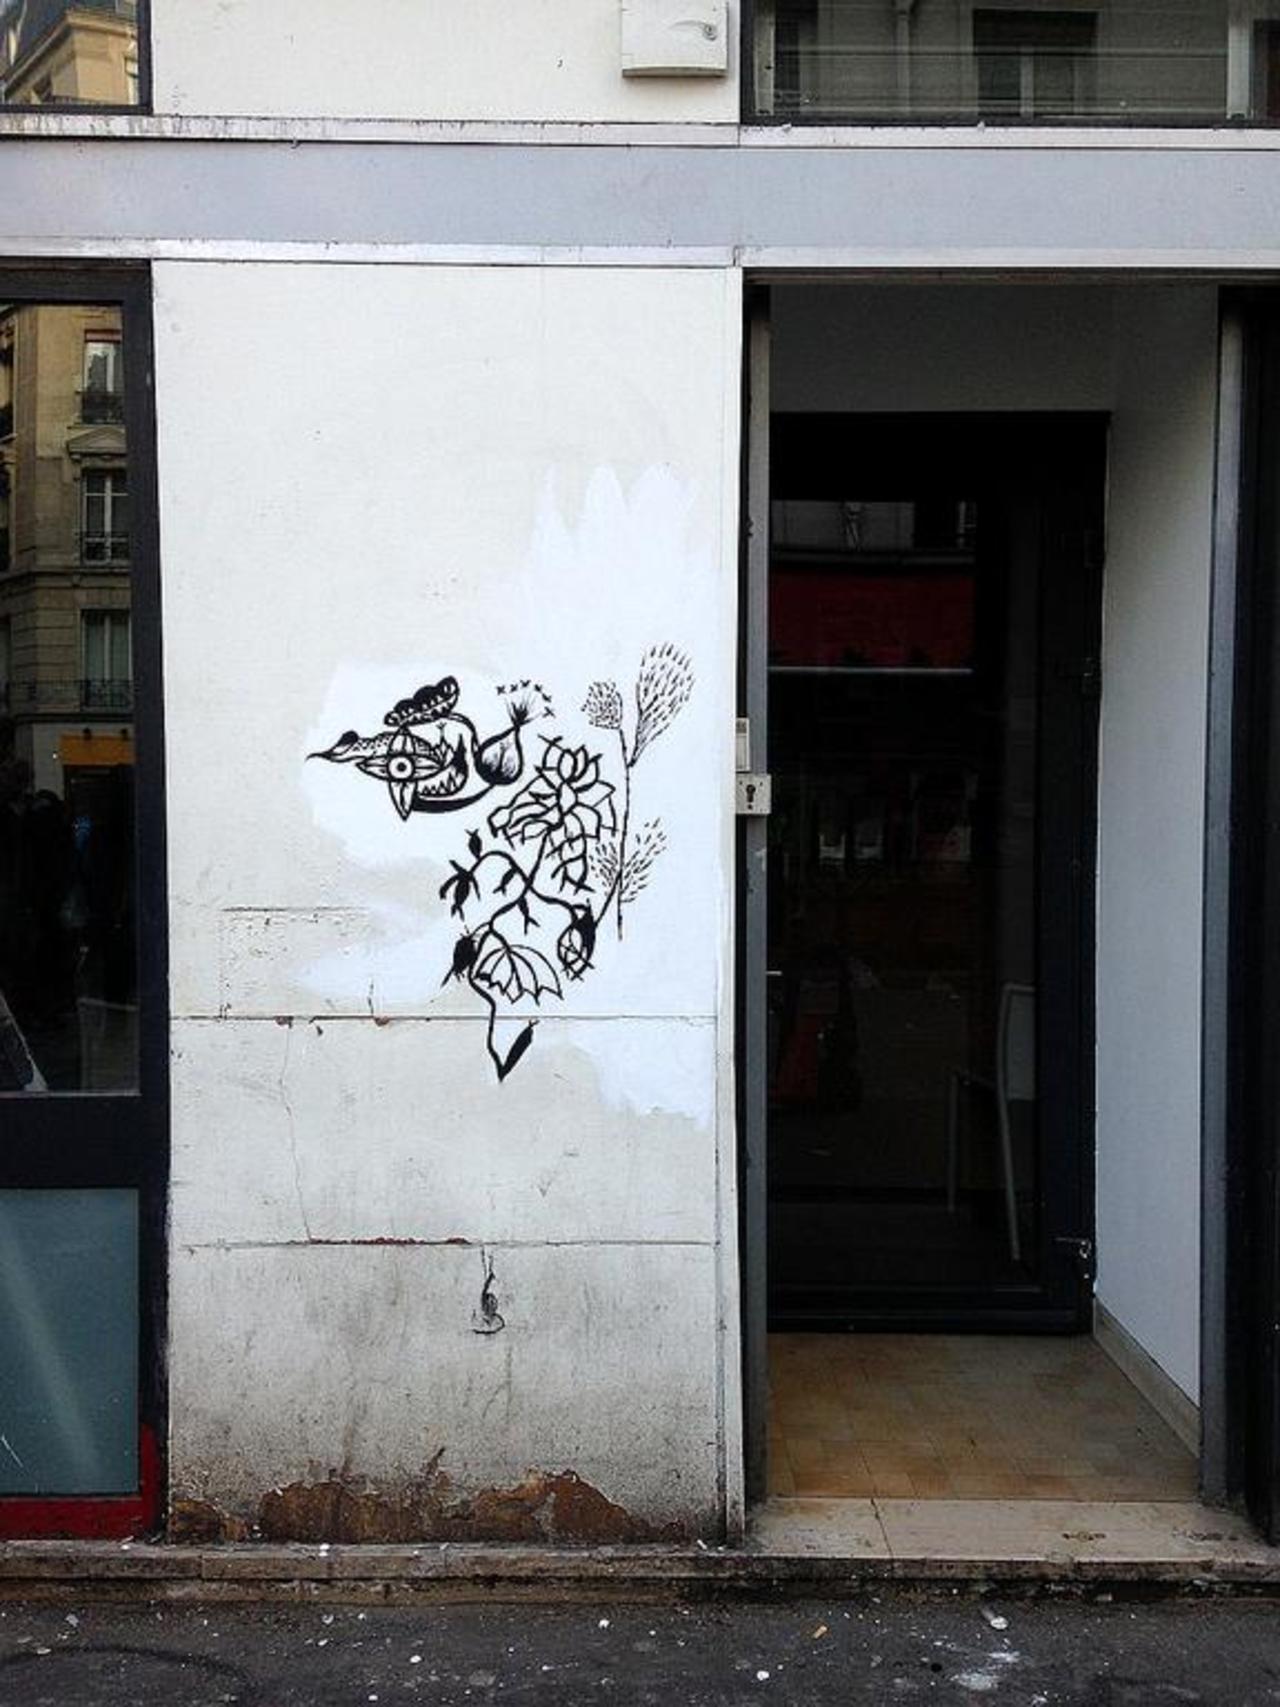 Street Art by Katjastroph in #Paris http://www.urbacolors.com #art #mural #graffiti #streetart http://t.co/bcCXn6UB1B